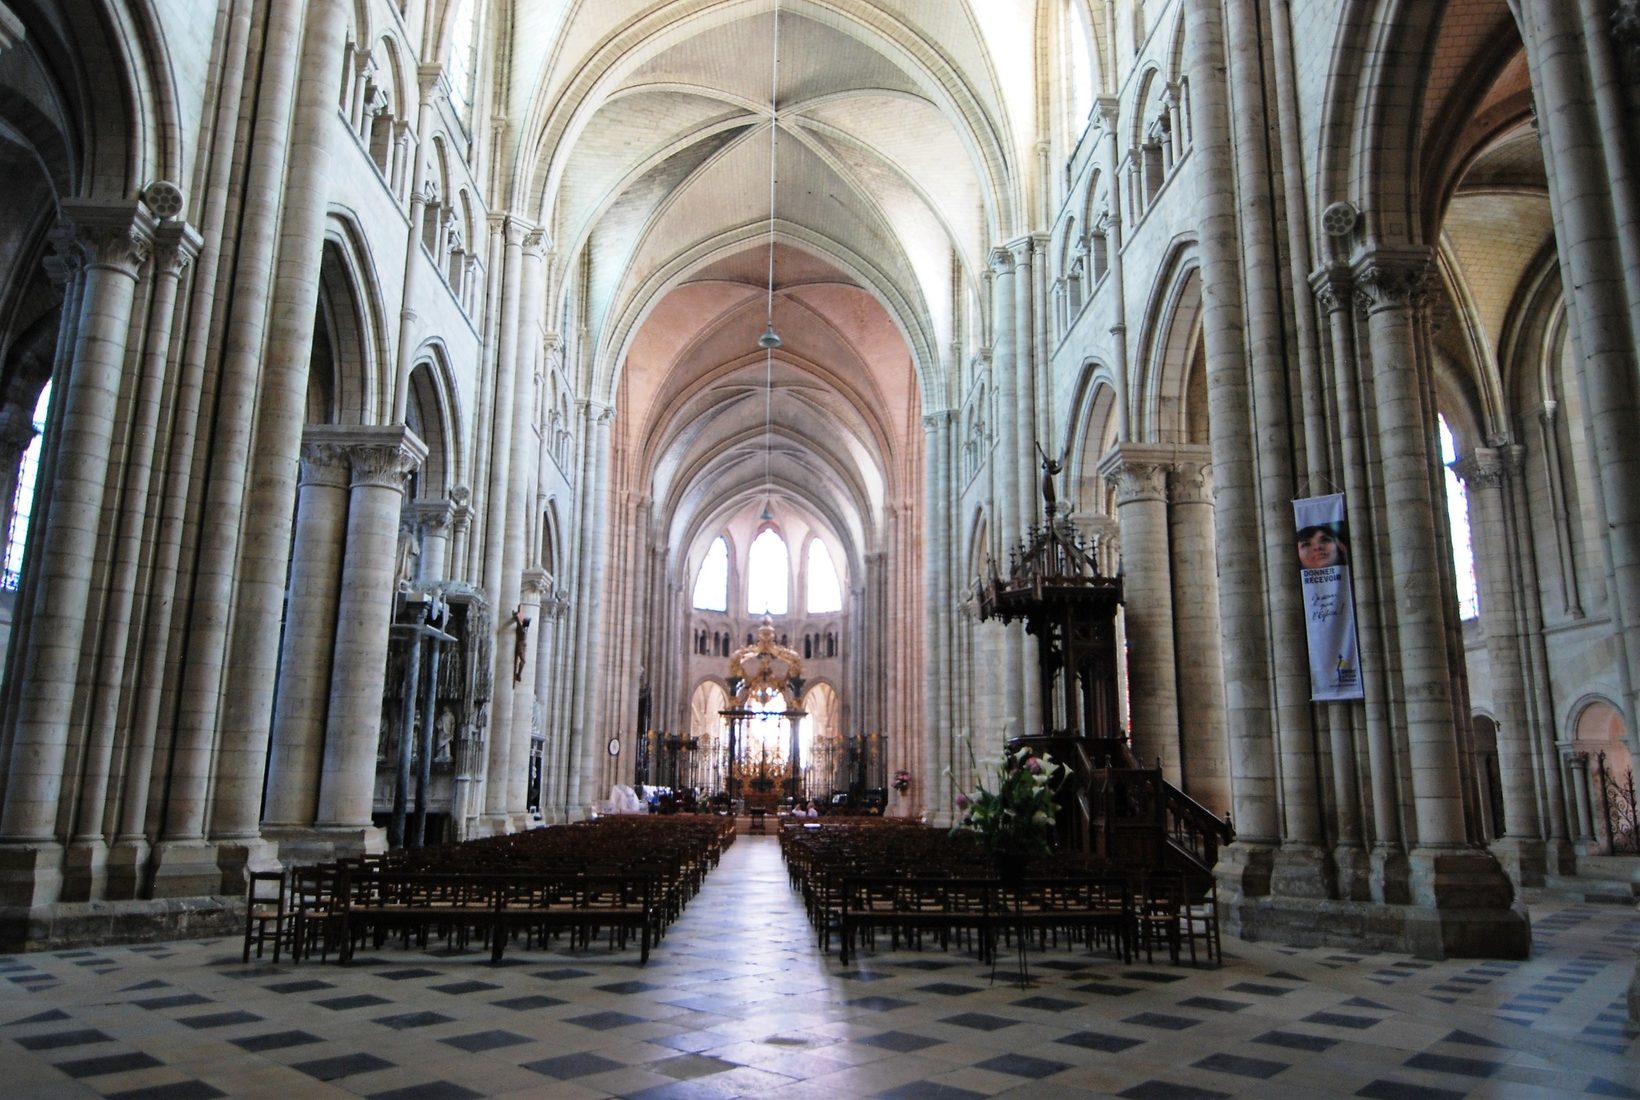 Sens, the original gothic cathedral.